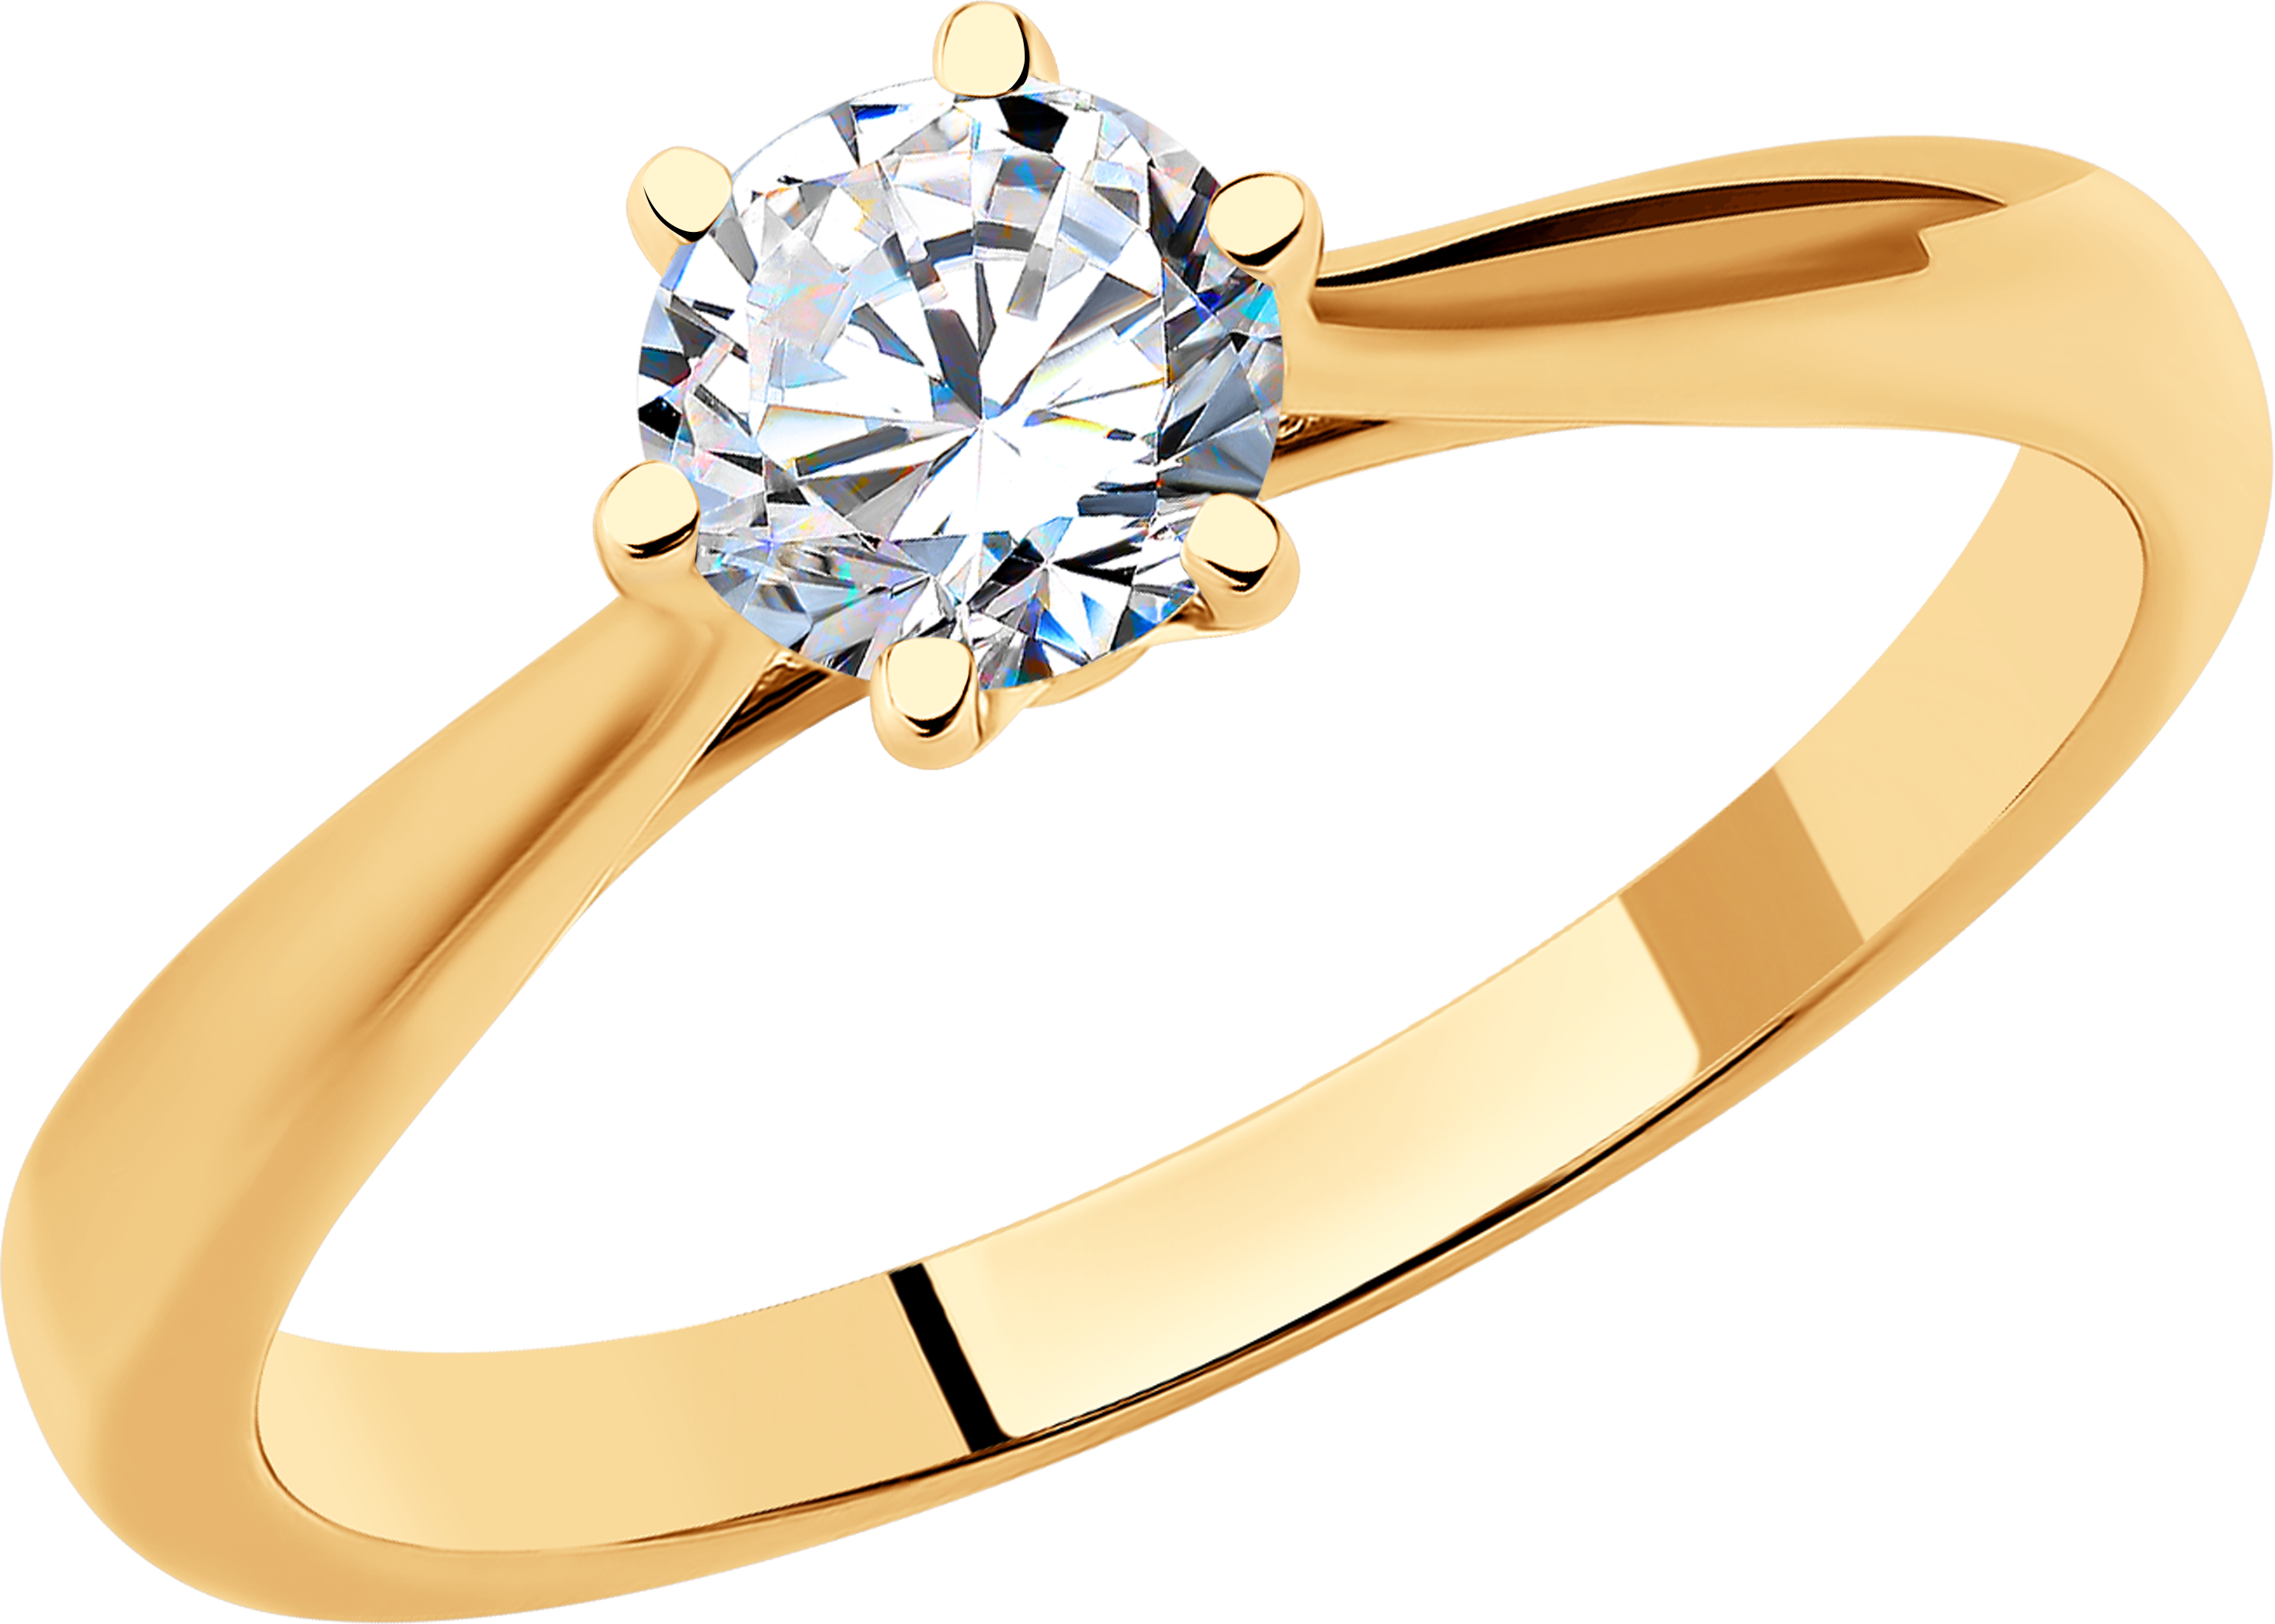 Кольцо SOKOLOV Diamonds из золота с бриллиантом